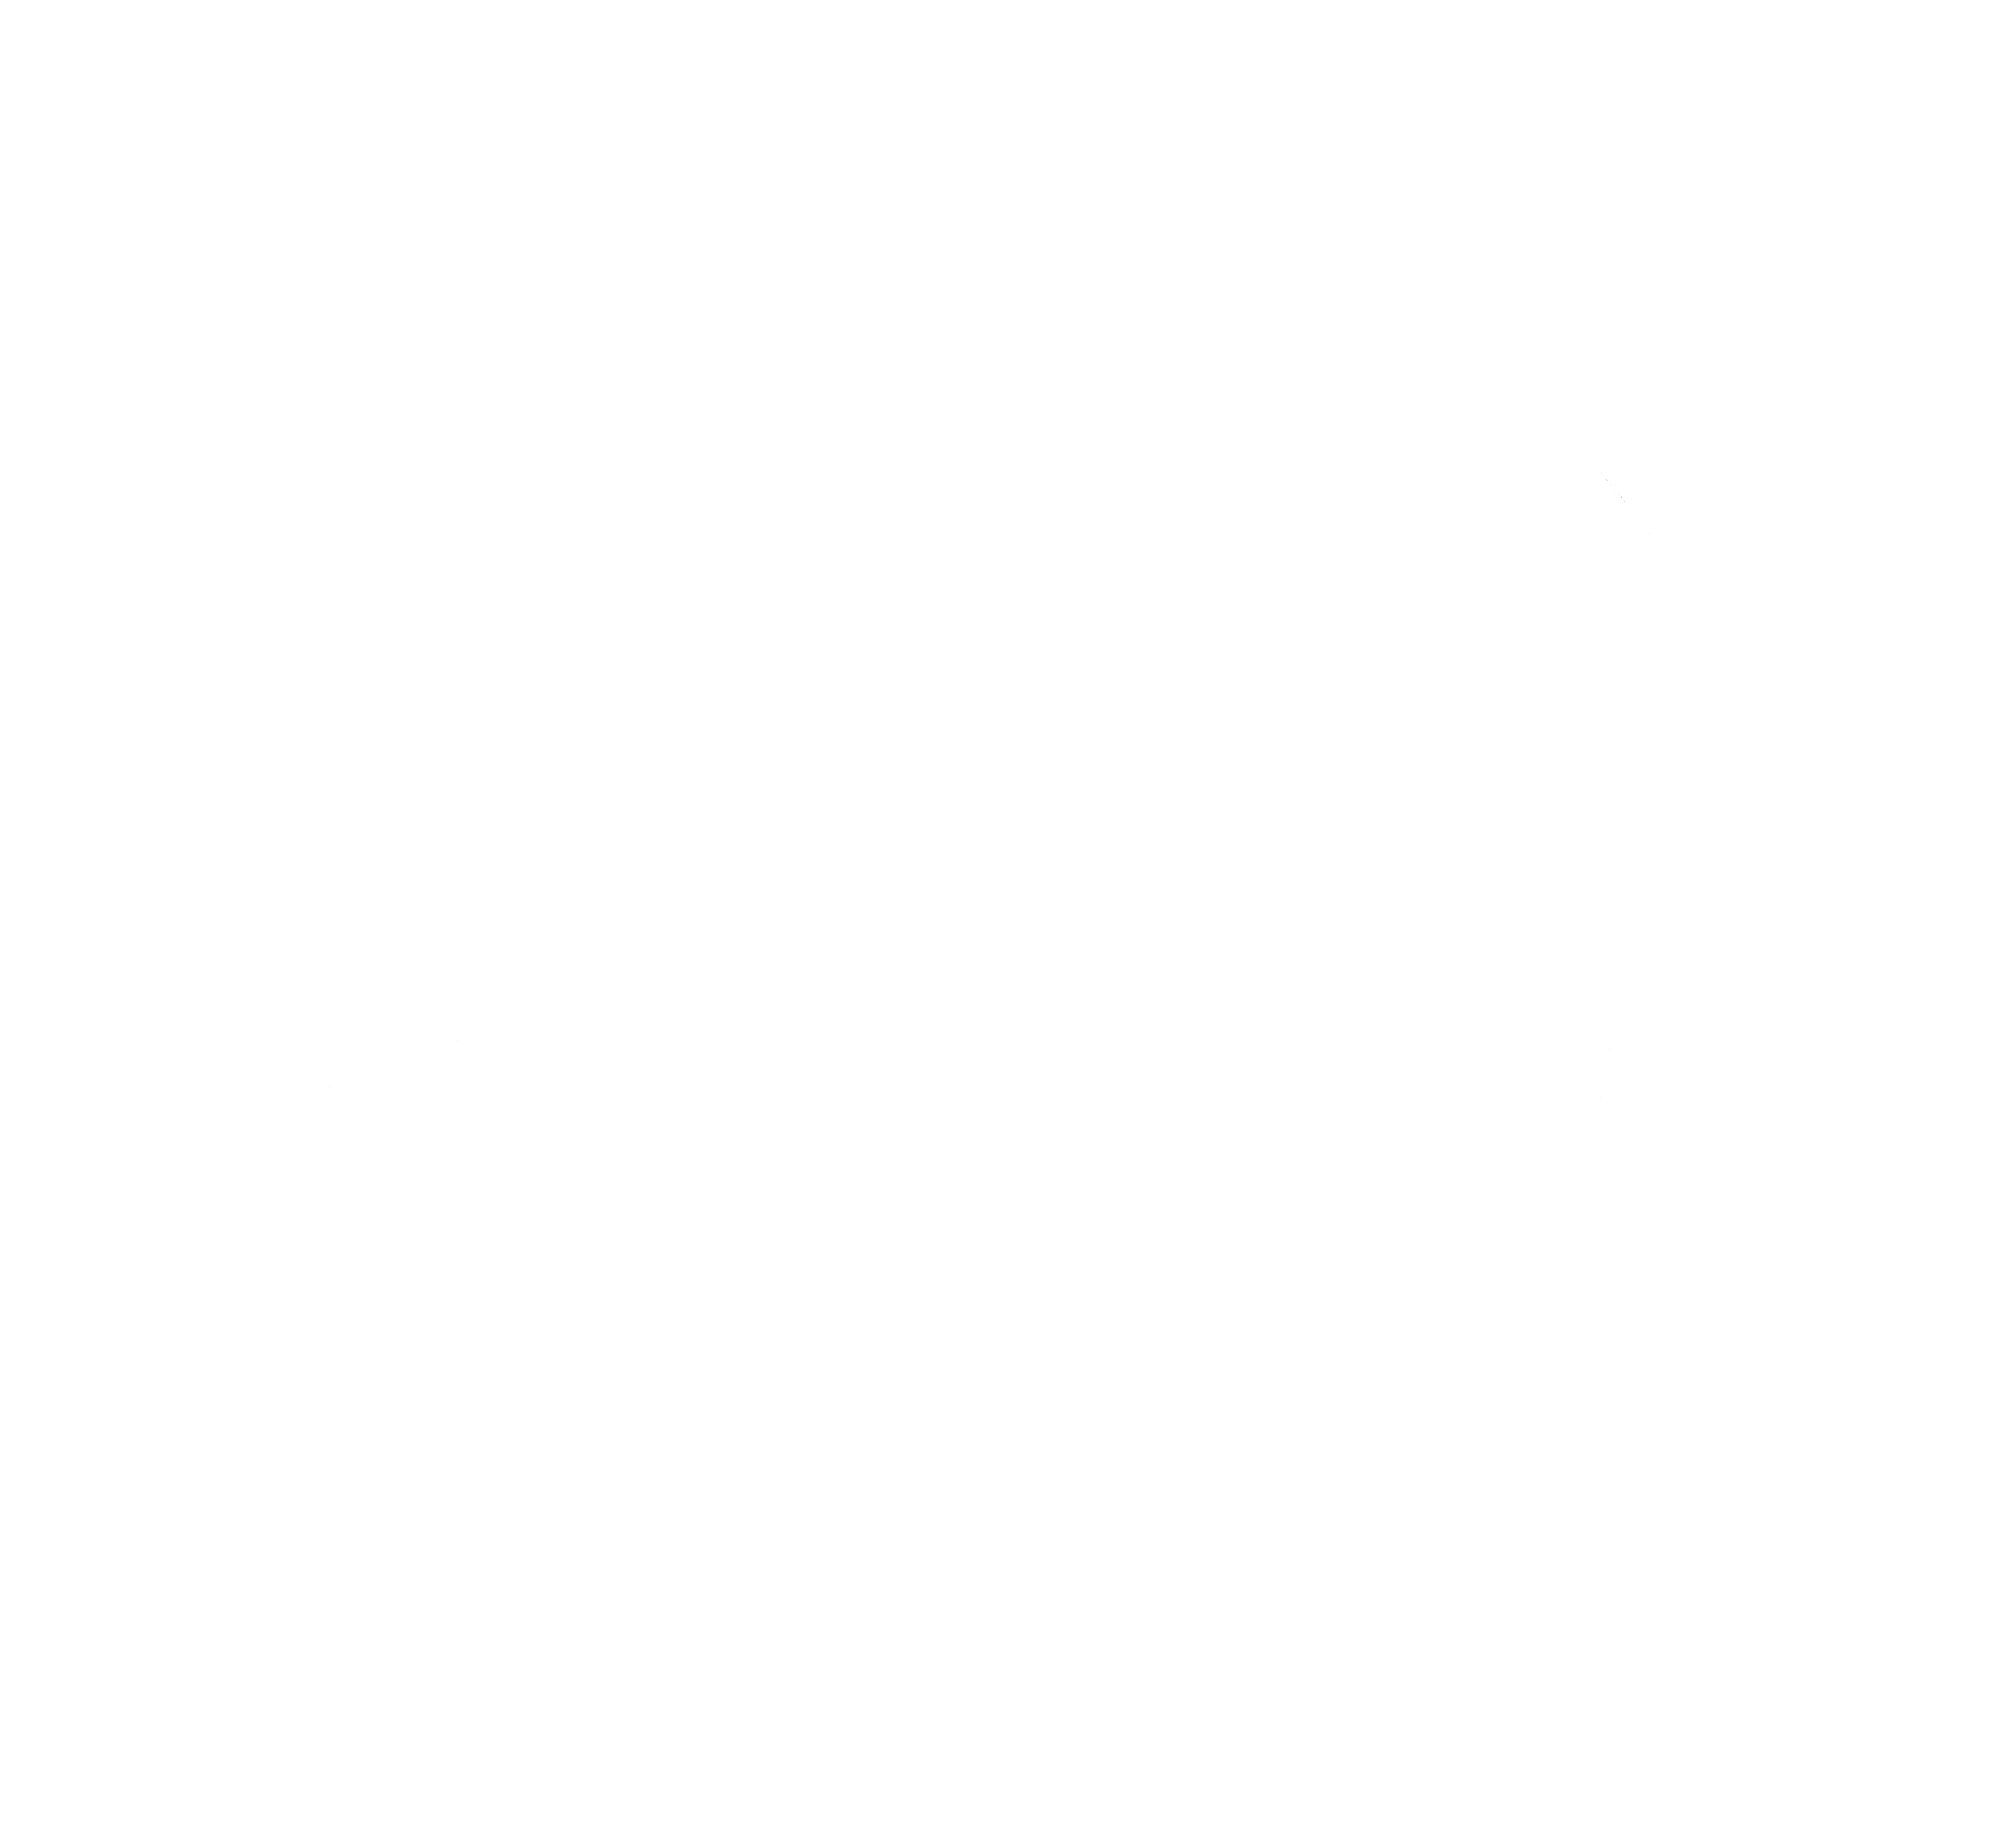 OpenShift Logo - OpenShift Logo PNG Transparent & SVG Vector - Freebie Supply